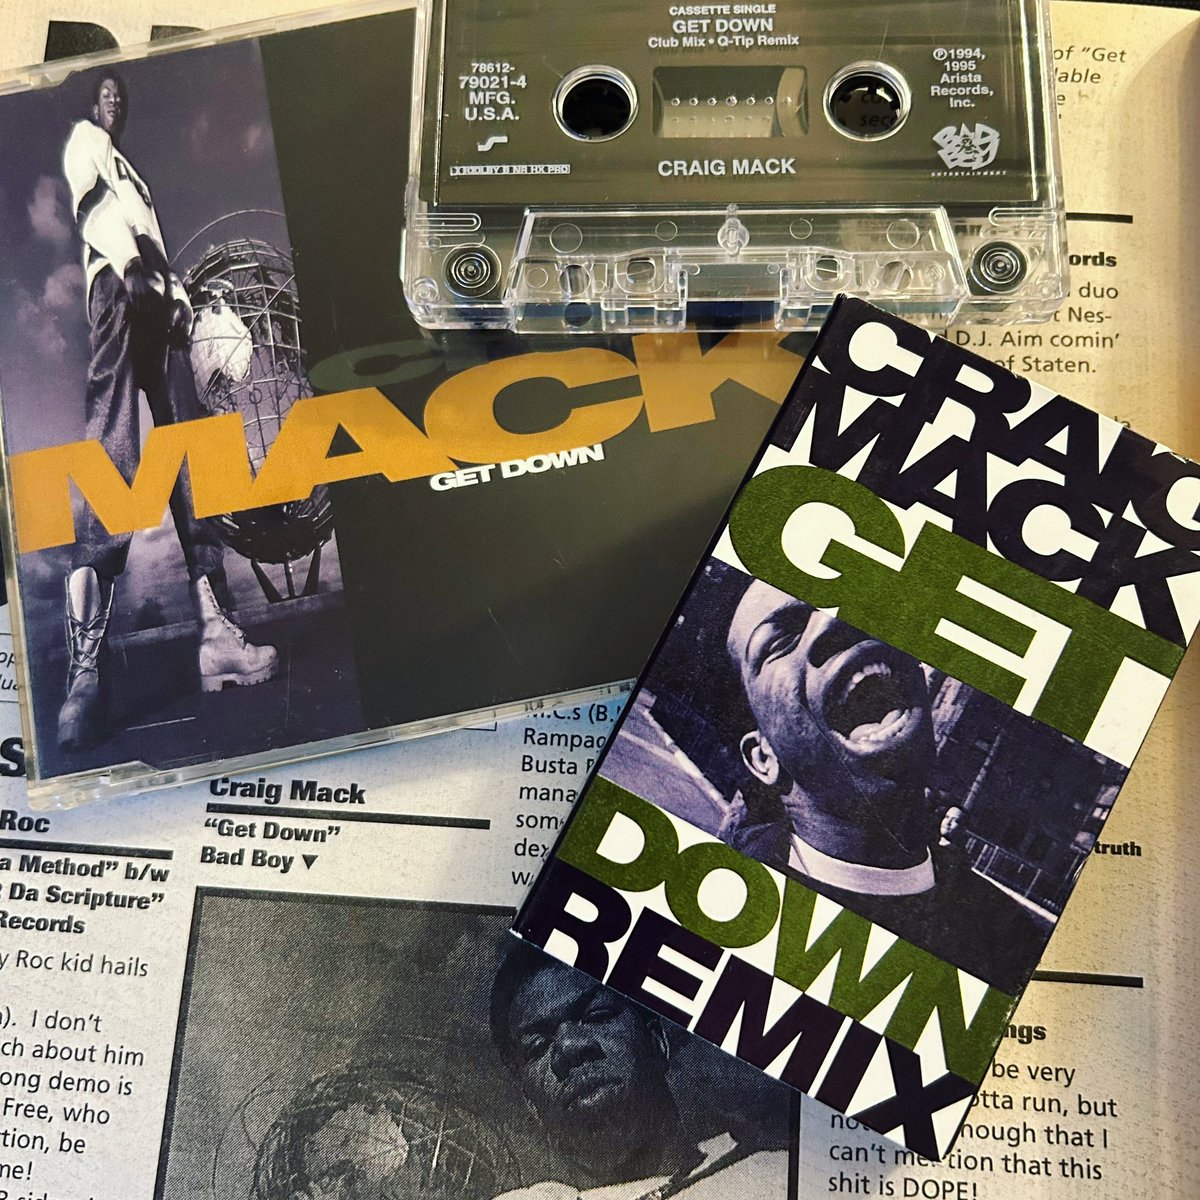 Craig Mack - Get Down

#getdown #clubmix #flavainyaear #radioedit #instrumental #qtip #remix #easymobee #badboy #entertainment #theflavor #magazine #classic #hiphop #cd #cassette #single #ripcraigmack #forever #celebrated #hiphopgods